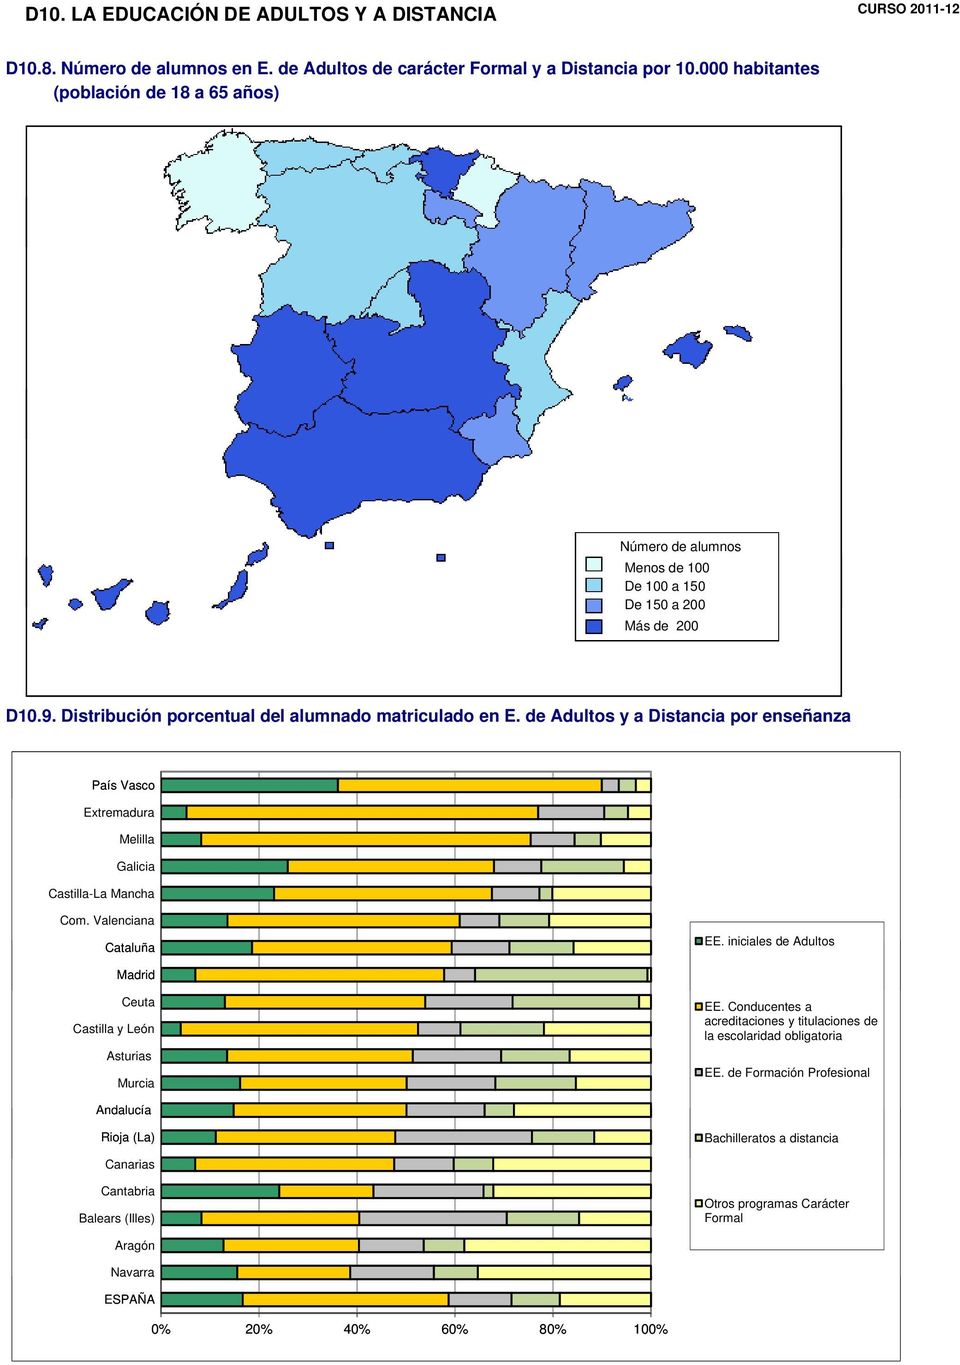 de Adultos y a Distancia por enseñanza País Vasco Extremadura Melilla Galicia CastillaLa Mancha Com.